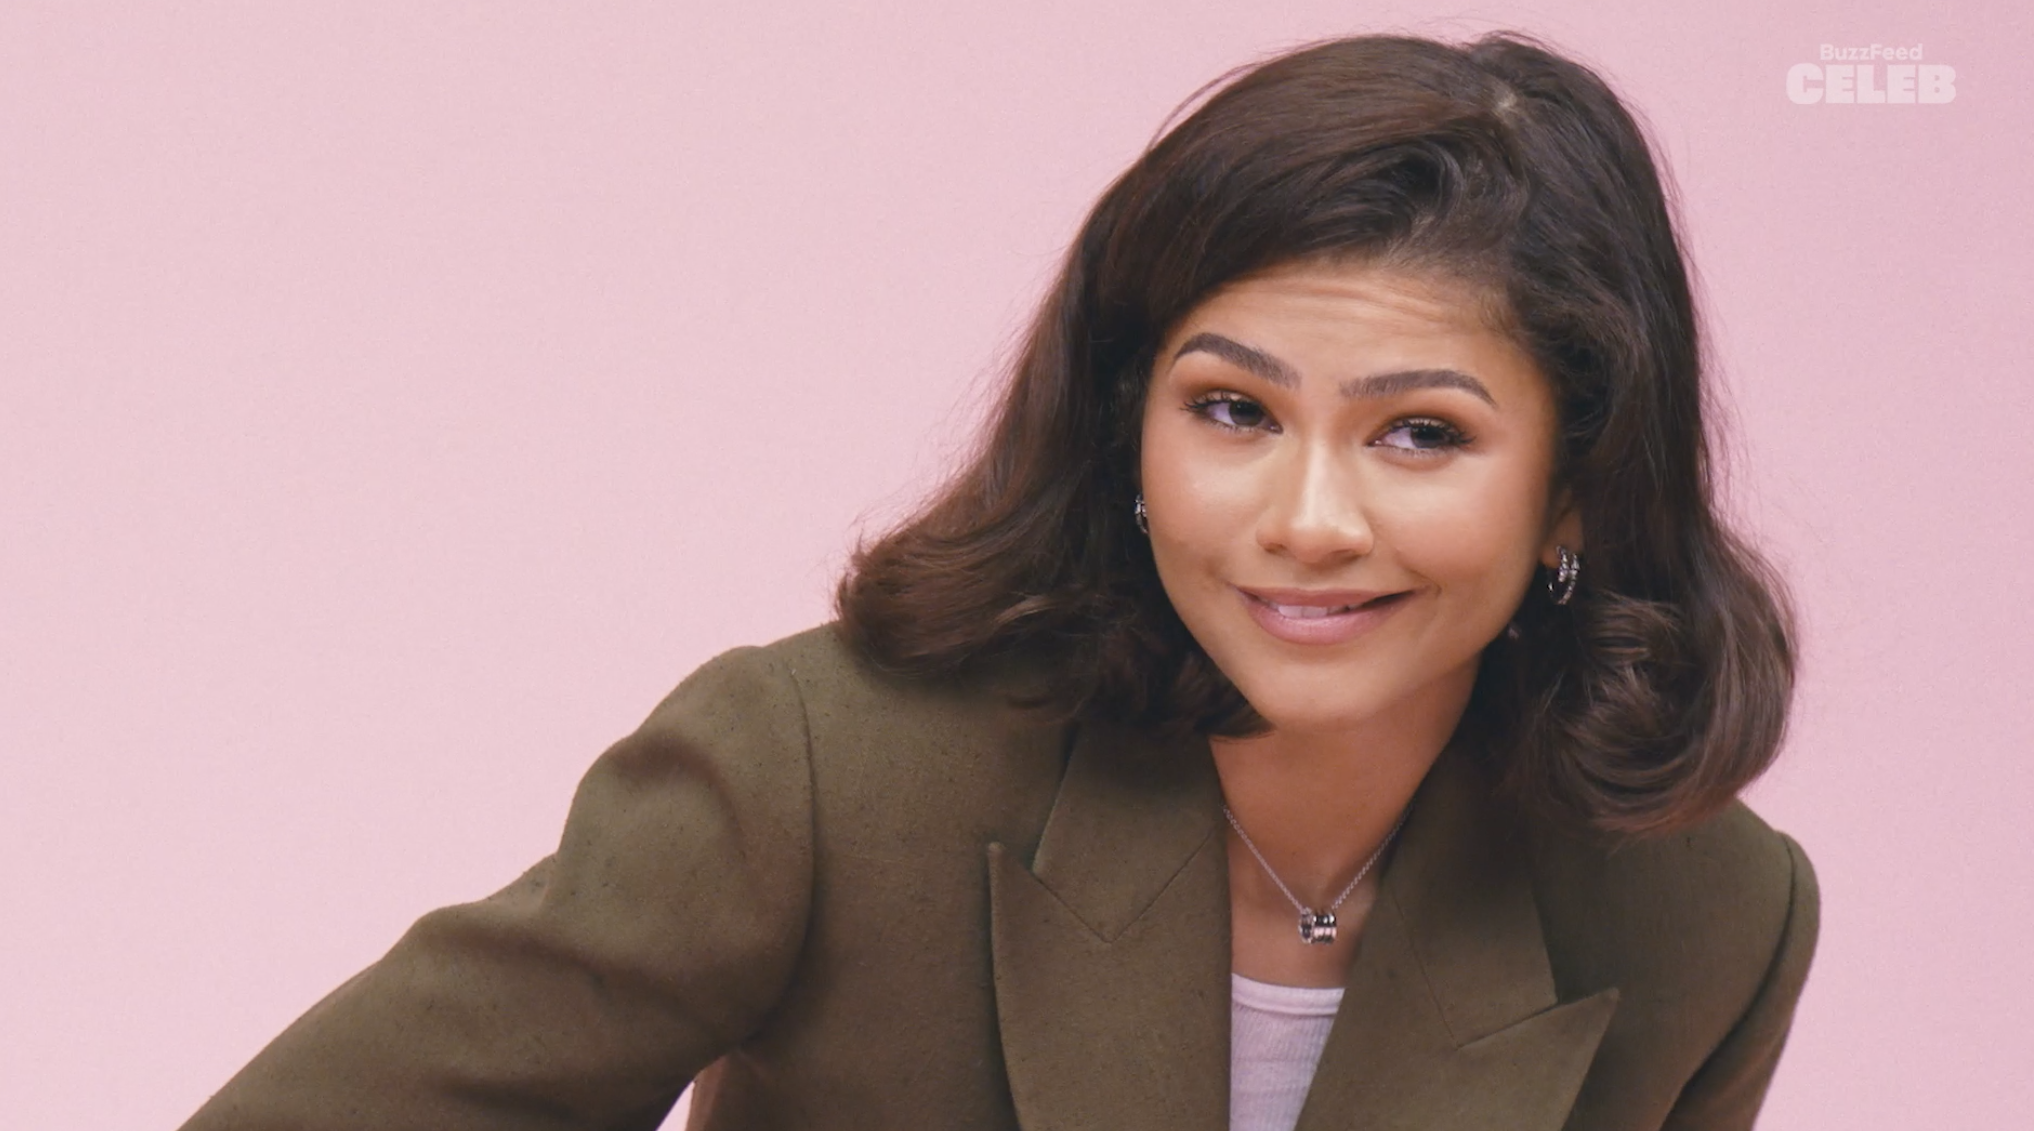 Zendaya smiles, wearing a brown blazer with a necklace, on Buzzfeed Celeb